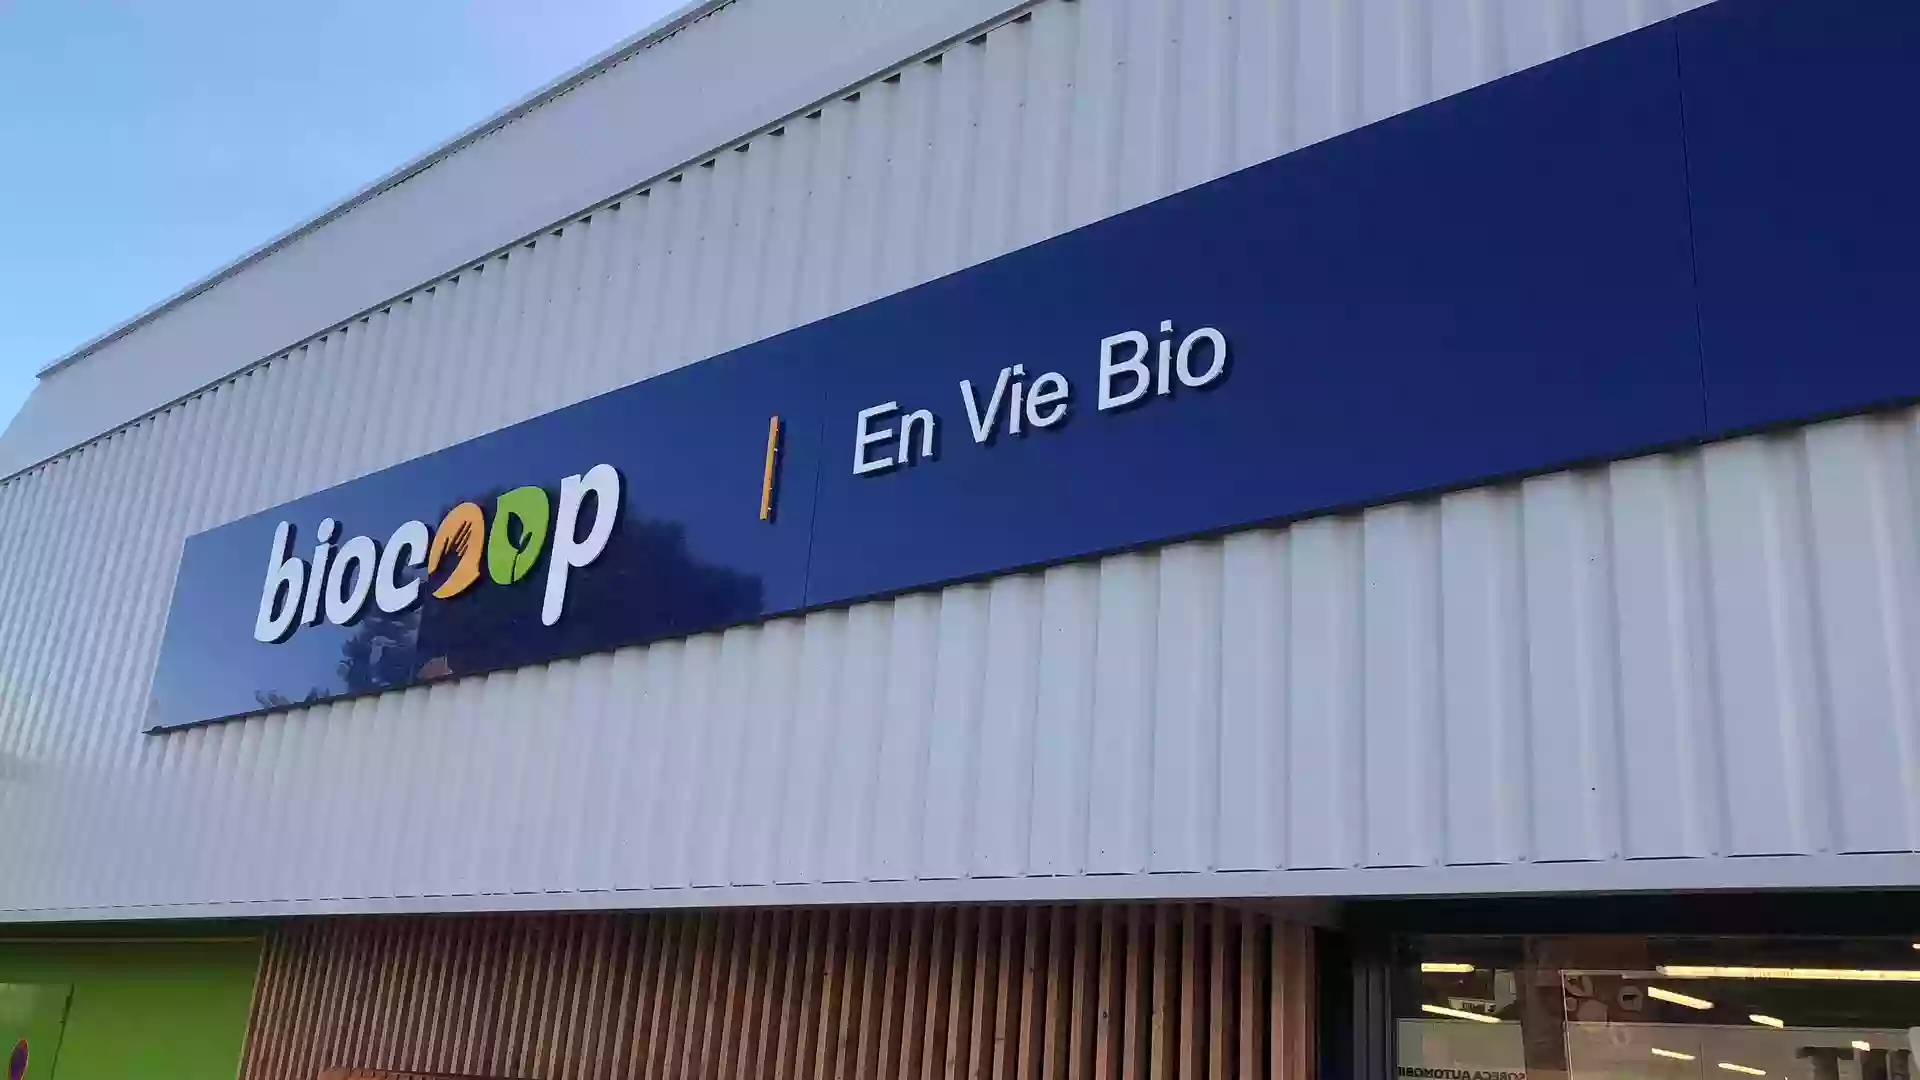 Biocoop En Vie Bio